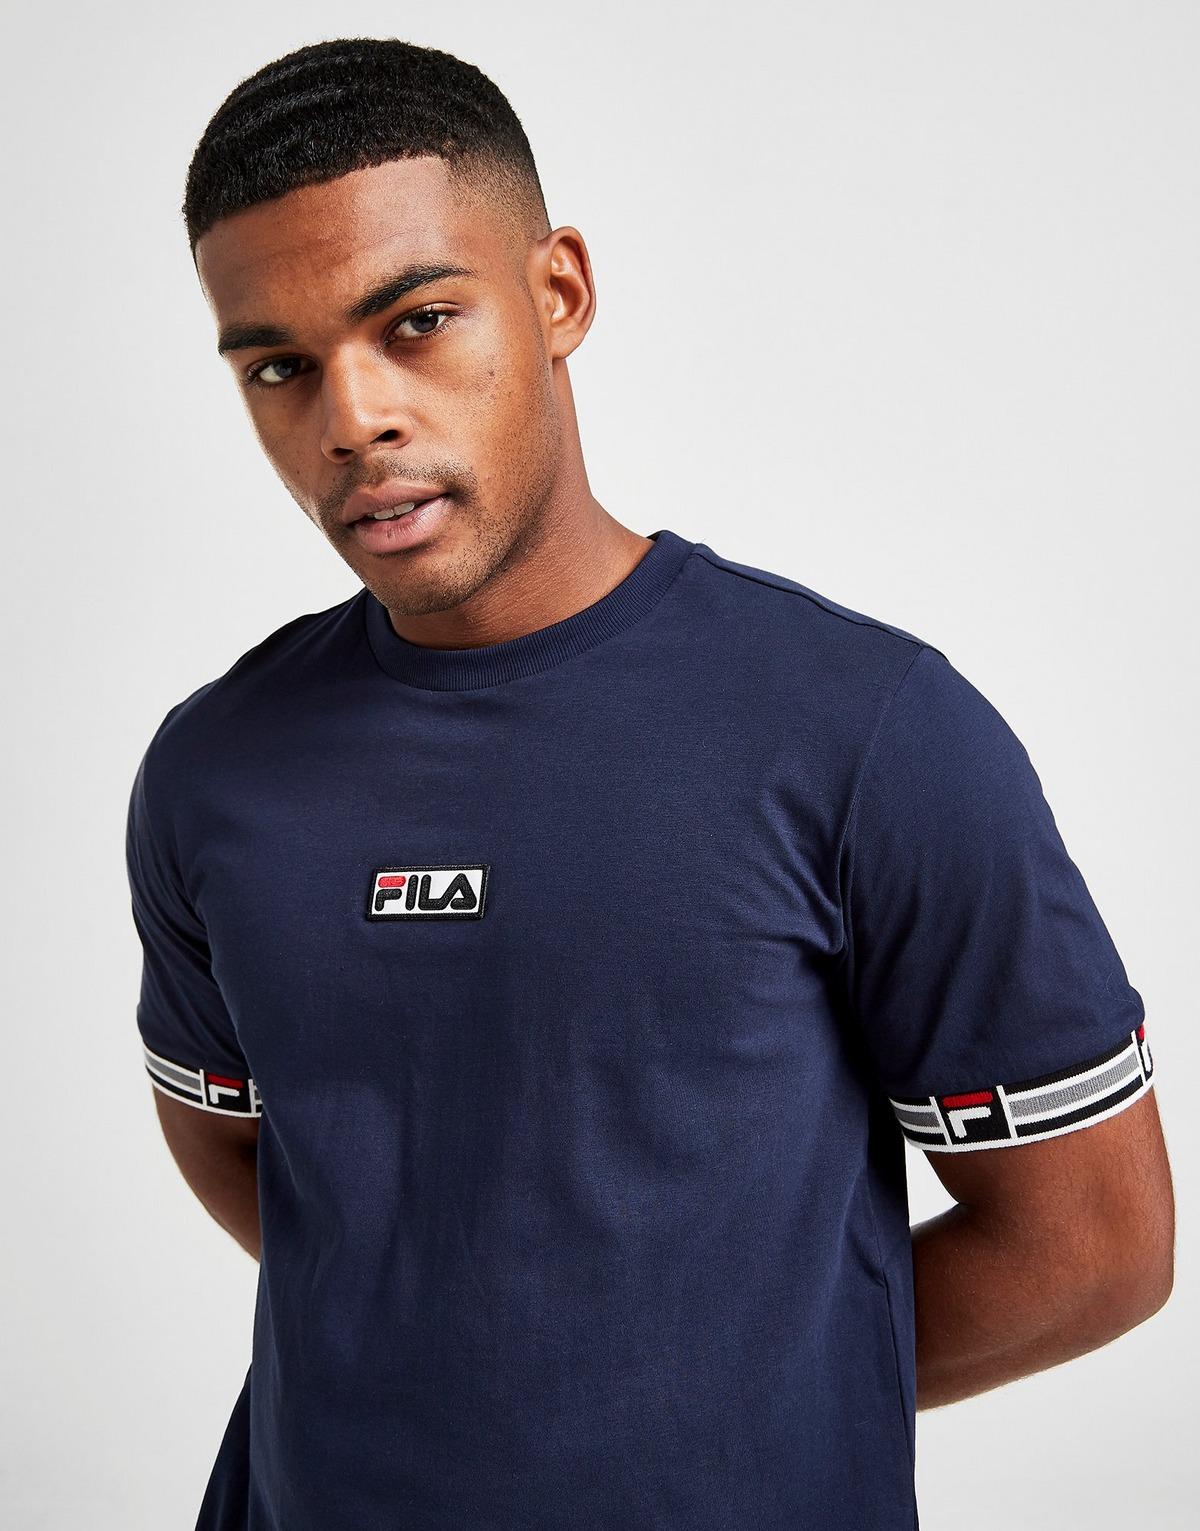 Fila Cotton Squadron Jacquard T-shirt in Navy (Blue) for Men - Lyst